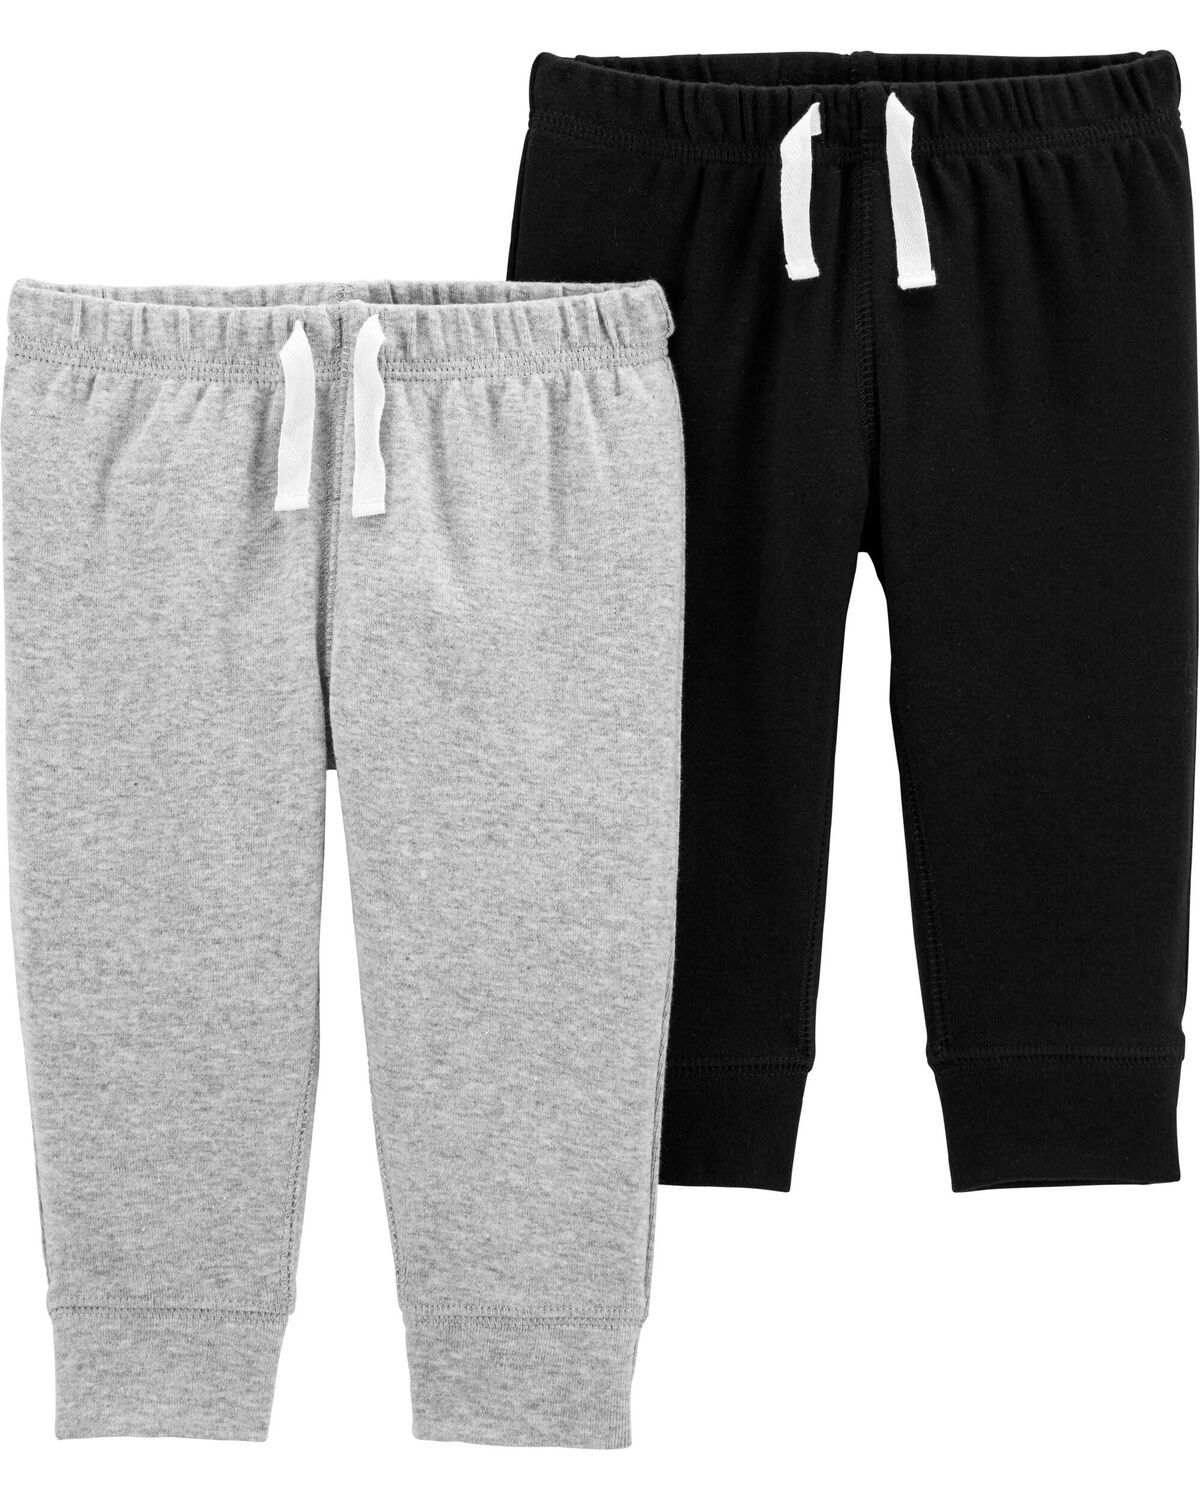 Grey/Black Baby 2-Pack Cotton Pants | carters.com